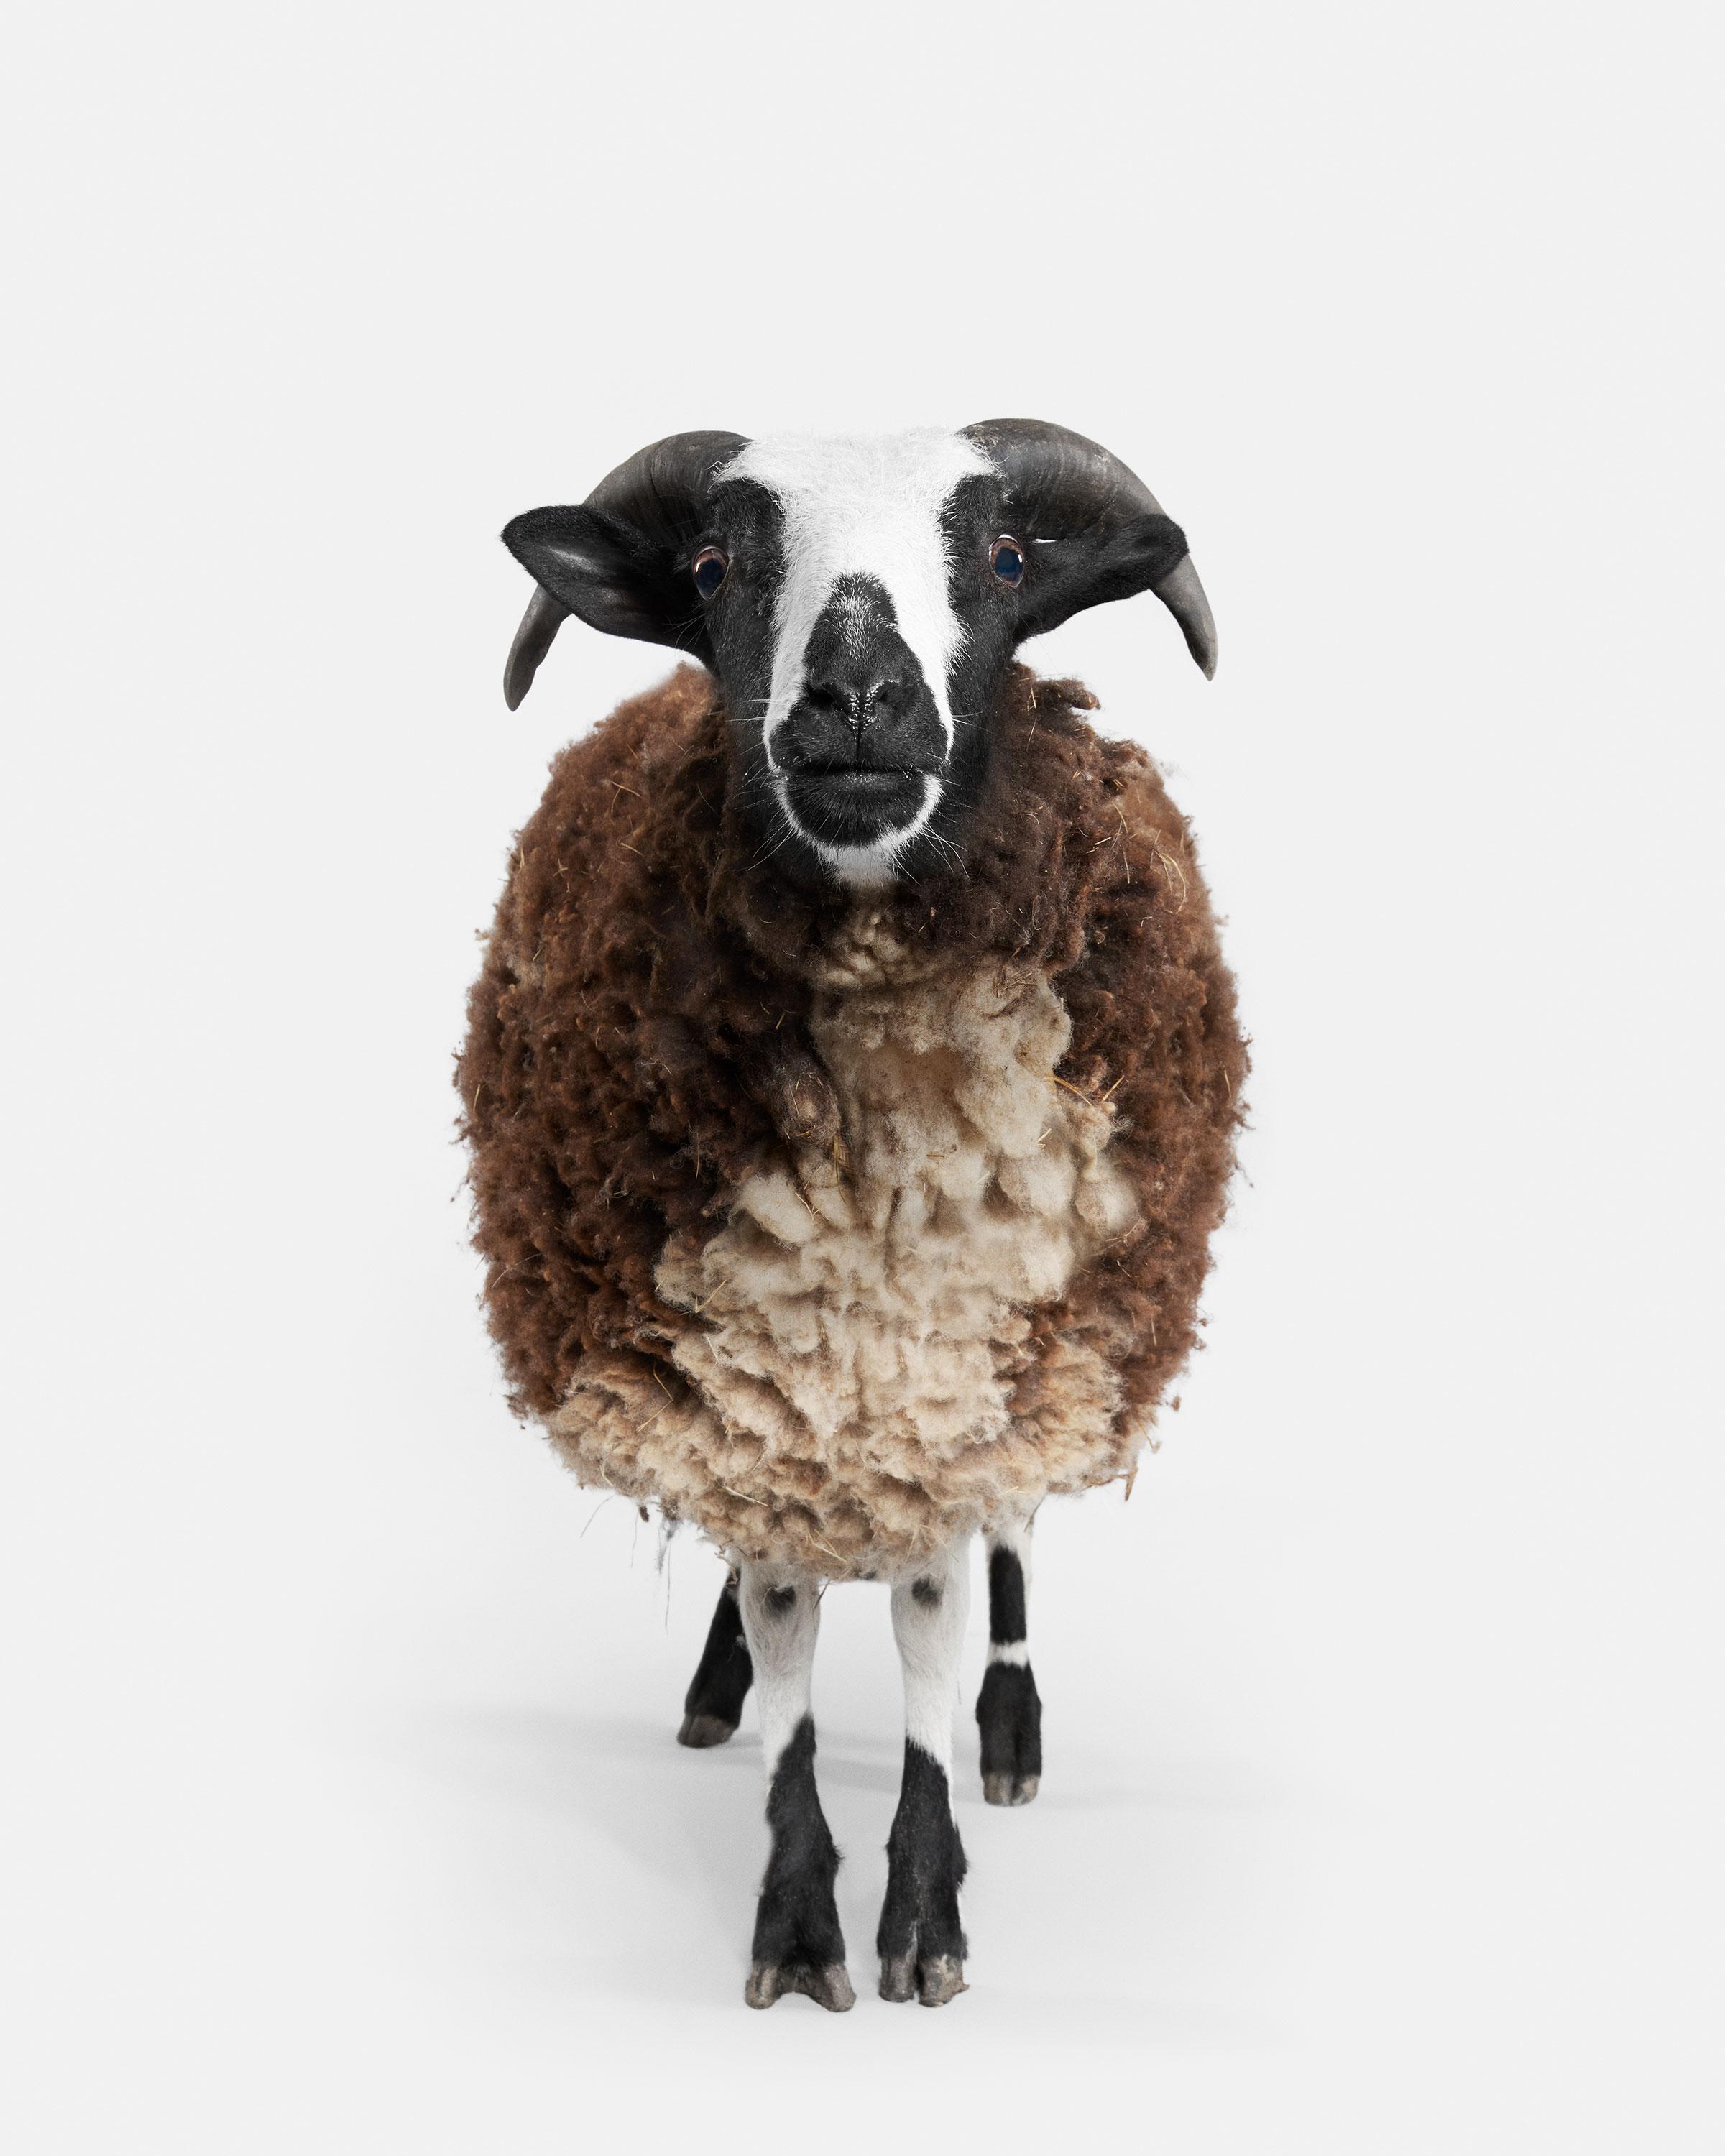 Randal Ford - Jacob Sheep No. 2, Photography 2018, Printed After